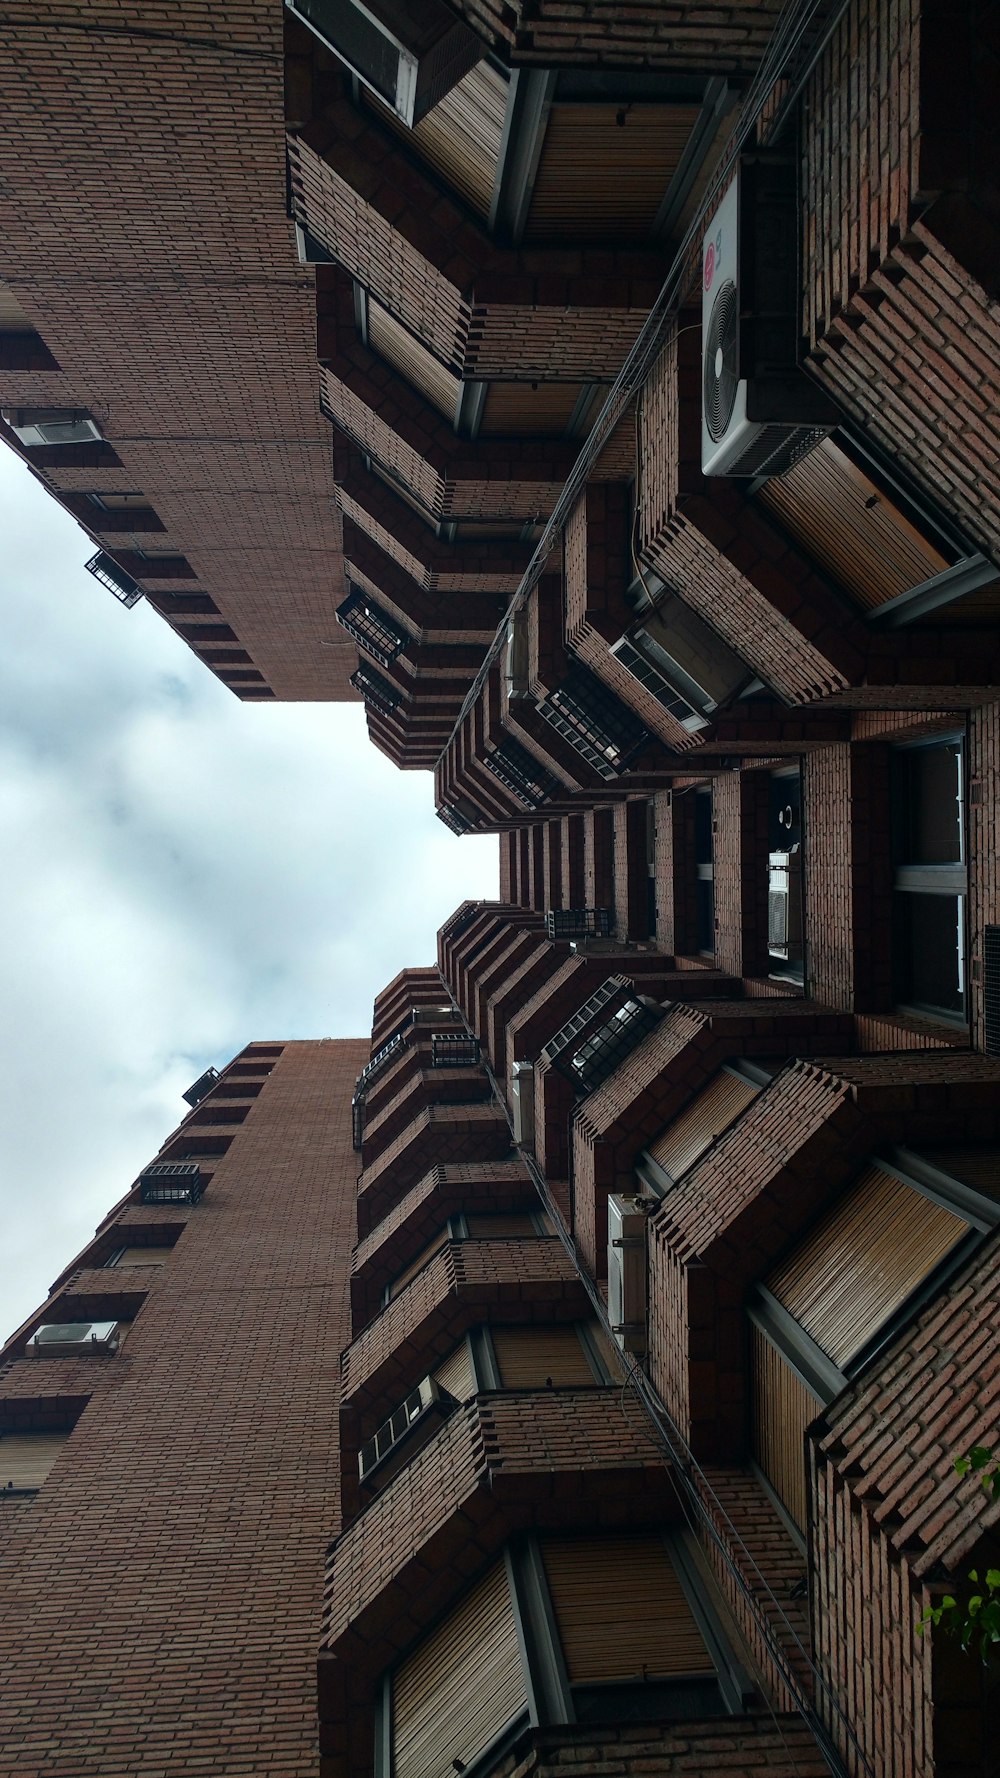 worm's eye view of brick buildings